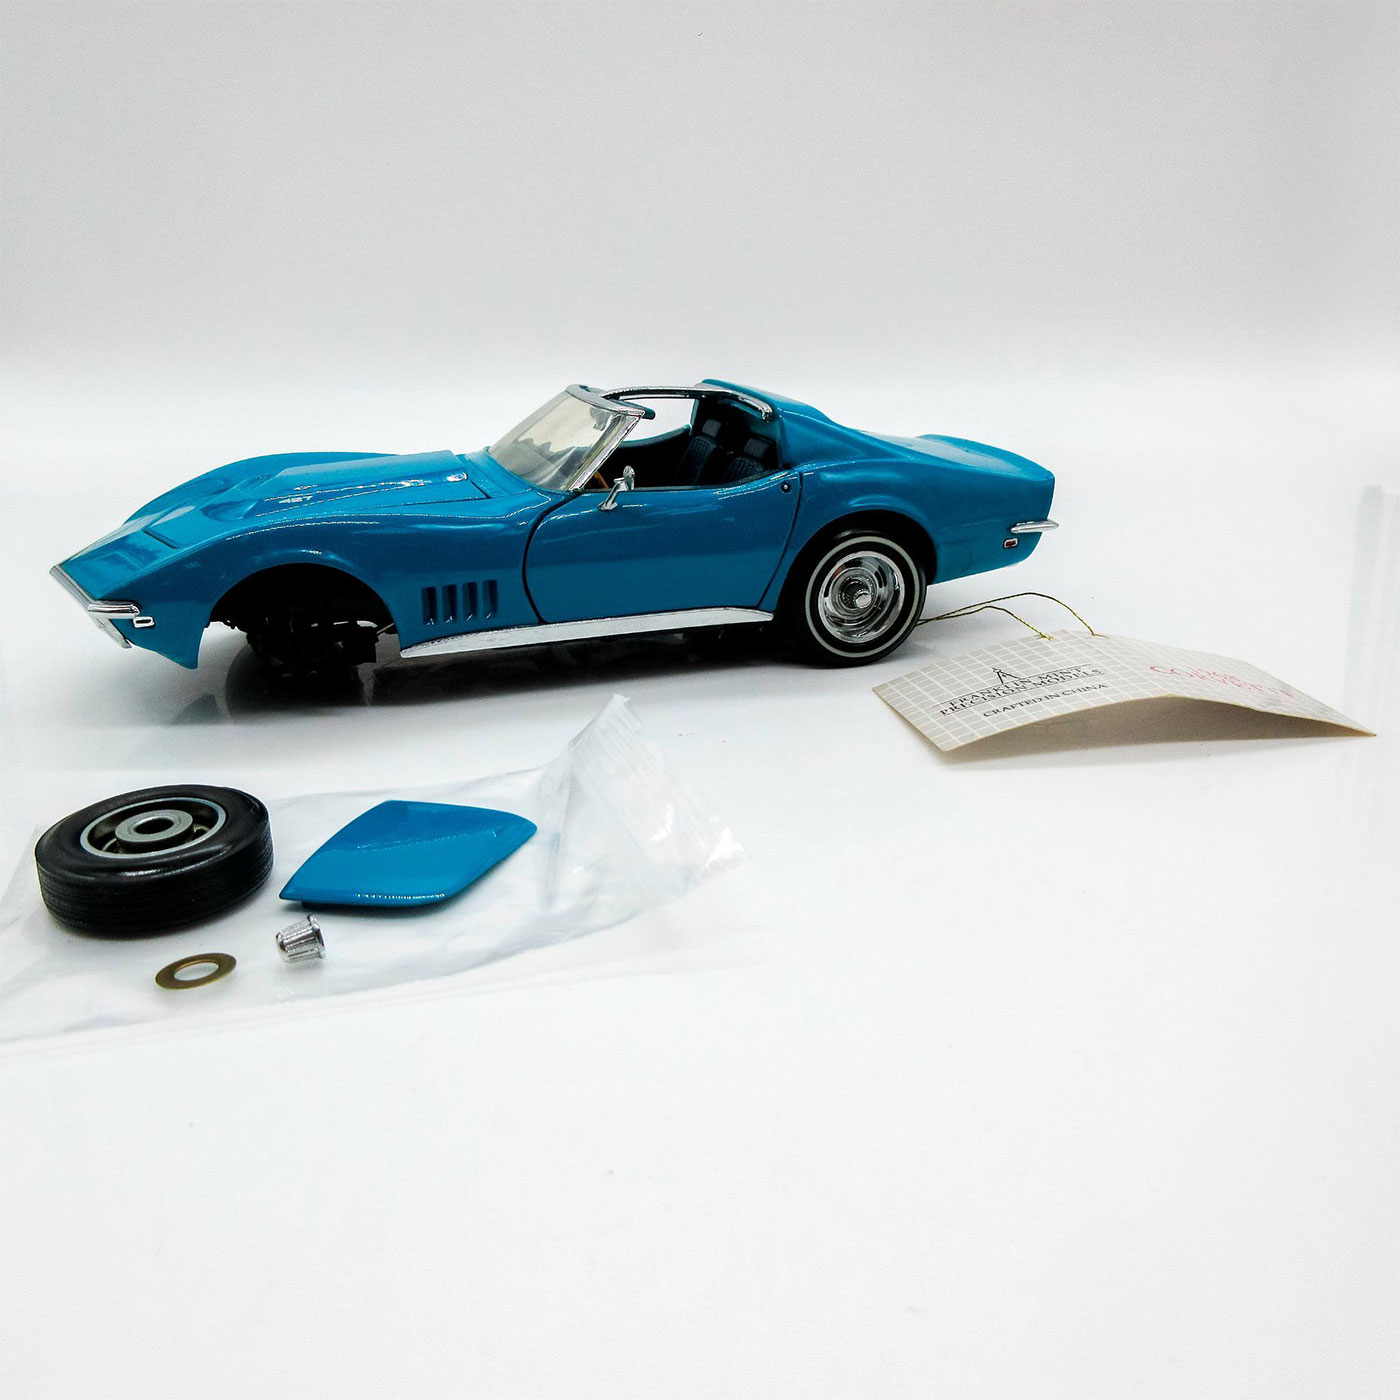 Franklin Mint 1968 Chevrolet Corvette Model Car - Image 2 of 4